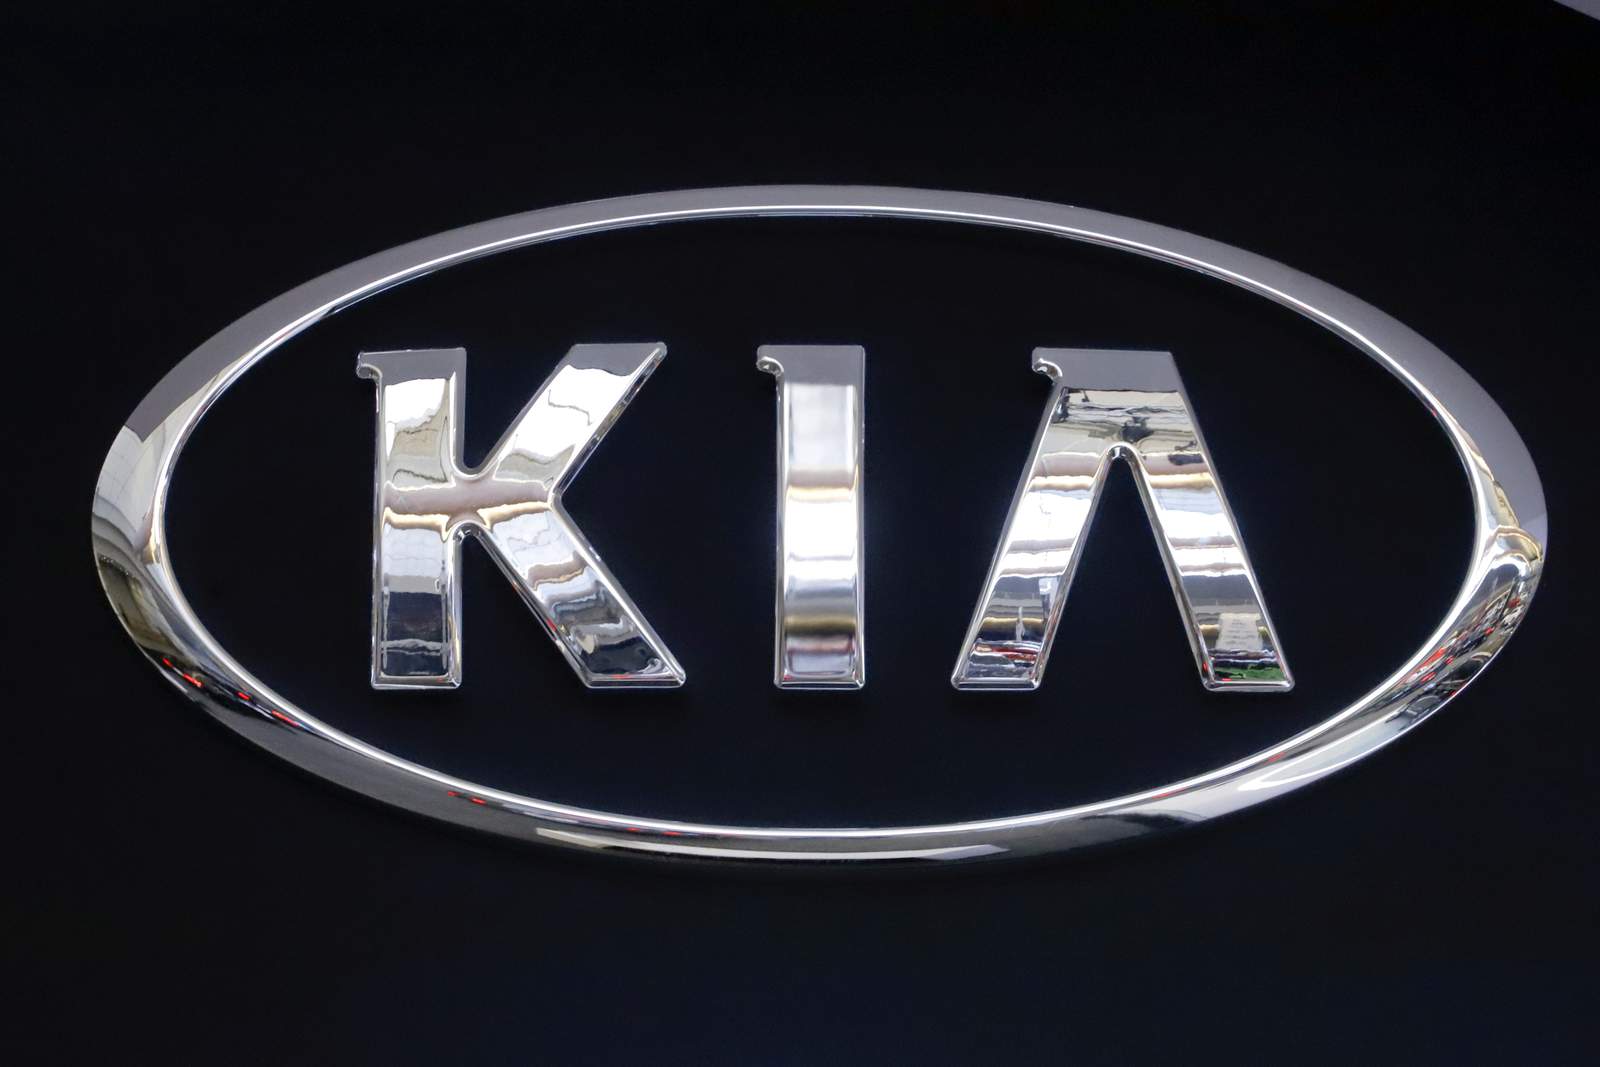 Kia recalls 308,000 vehicle’s due to potential fire hazard